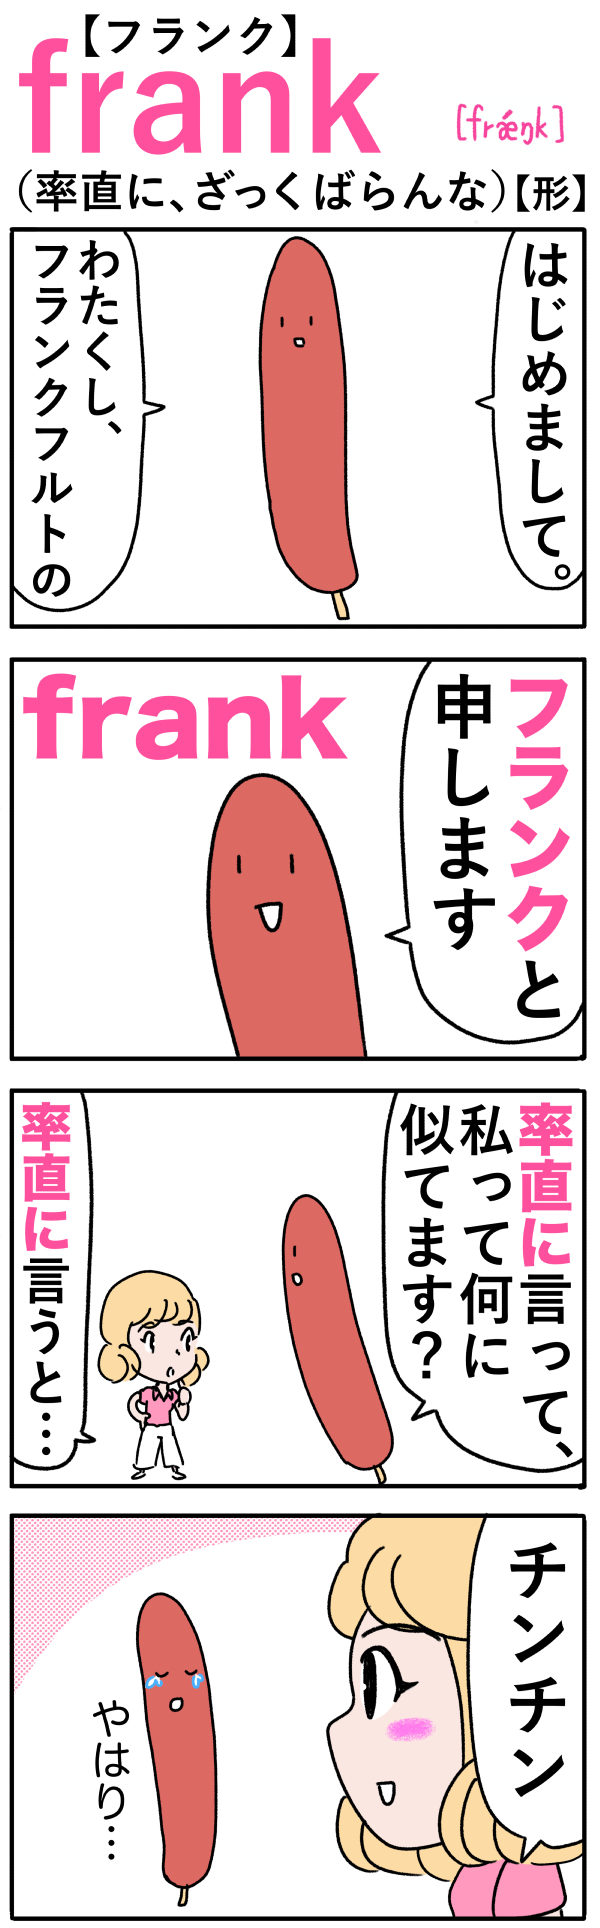 frank（率直に）の語呂合わせ英単語